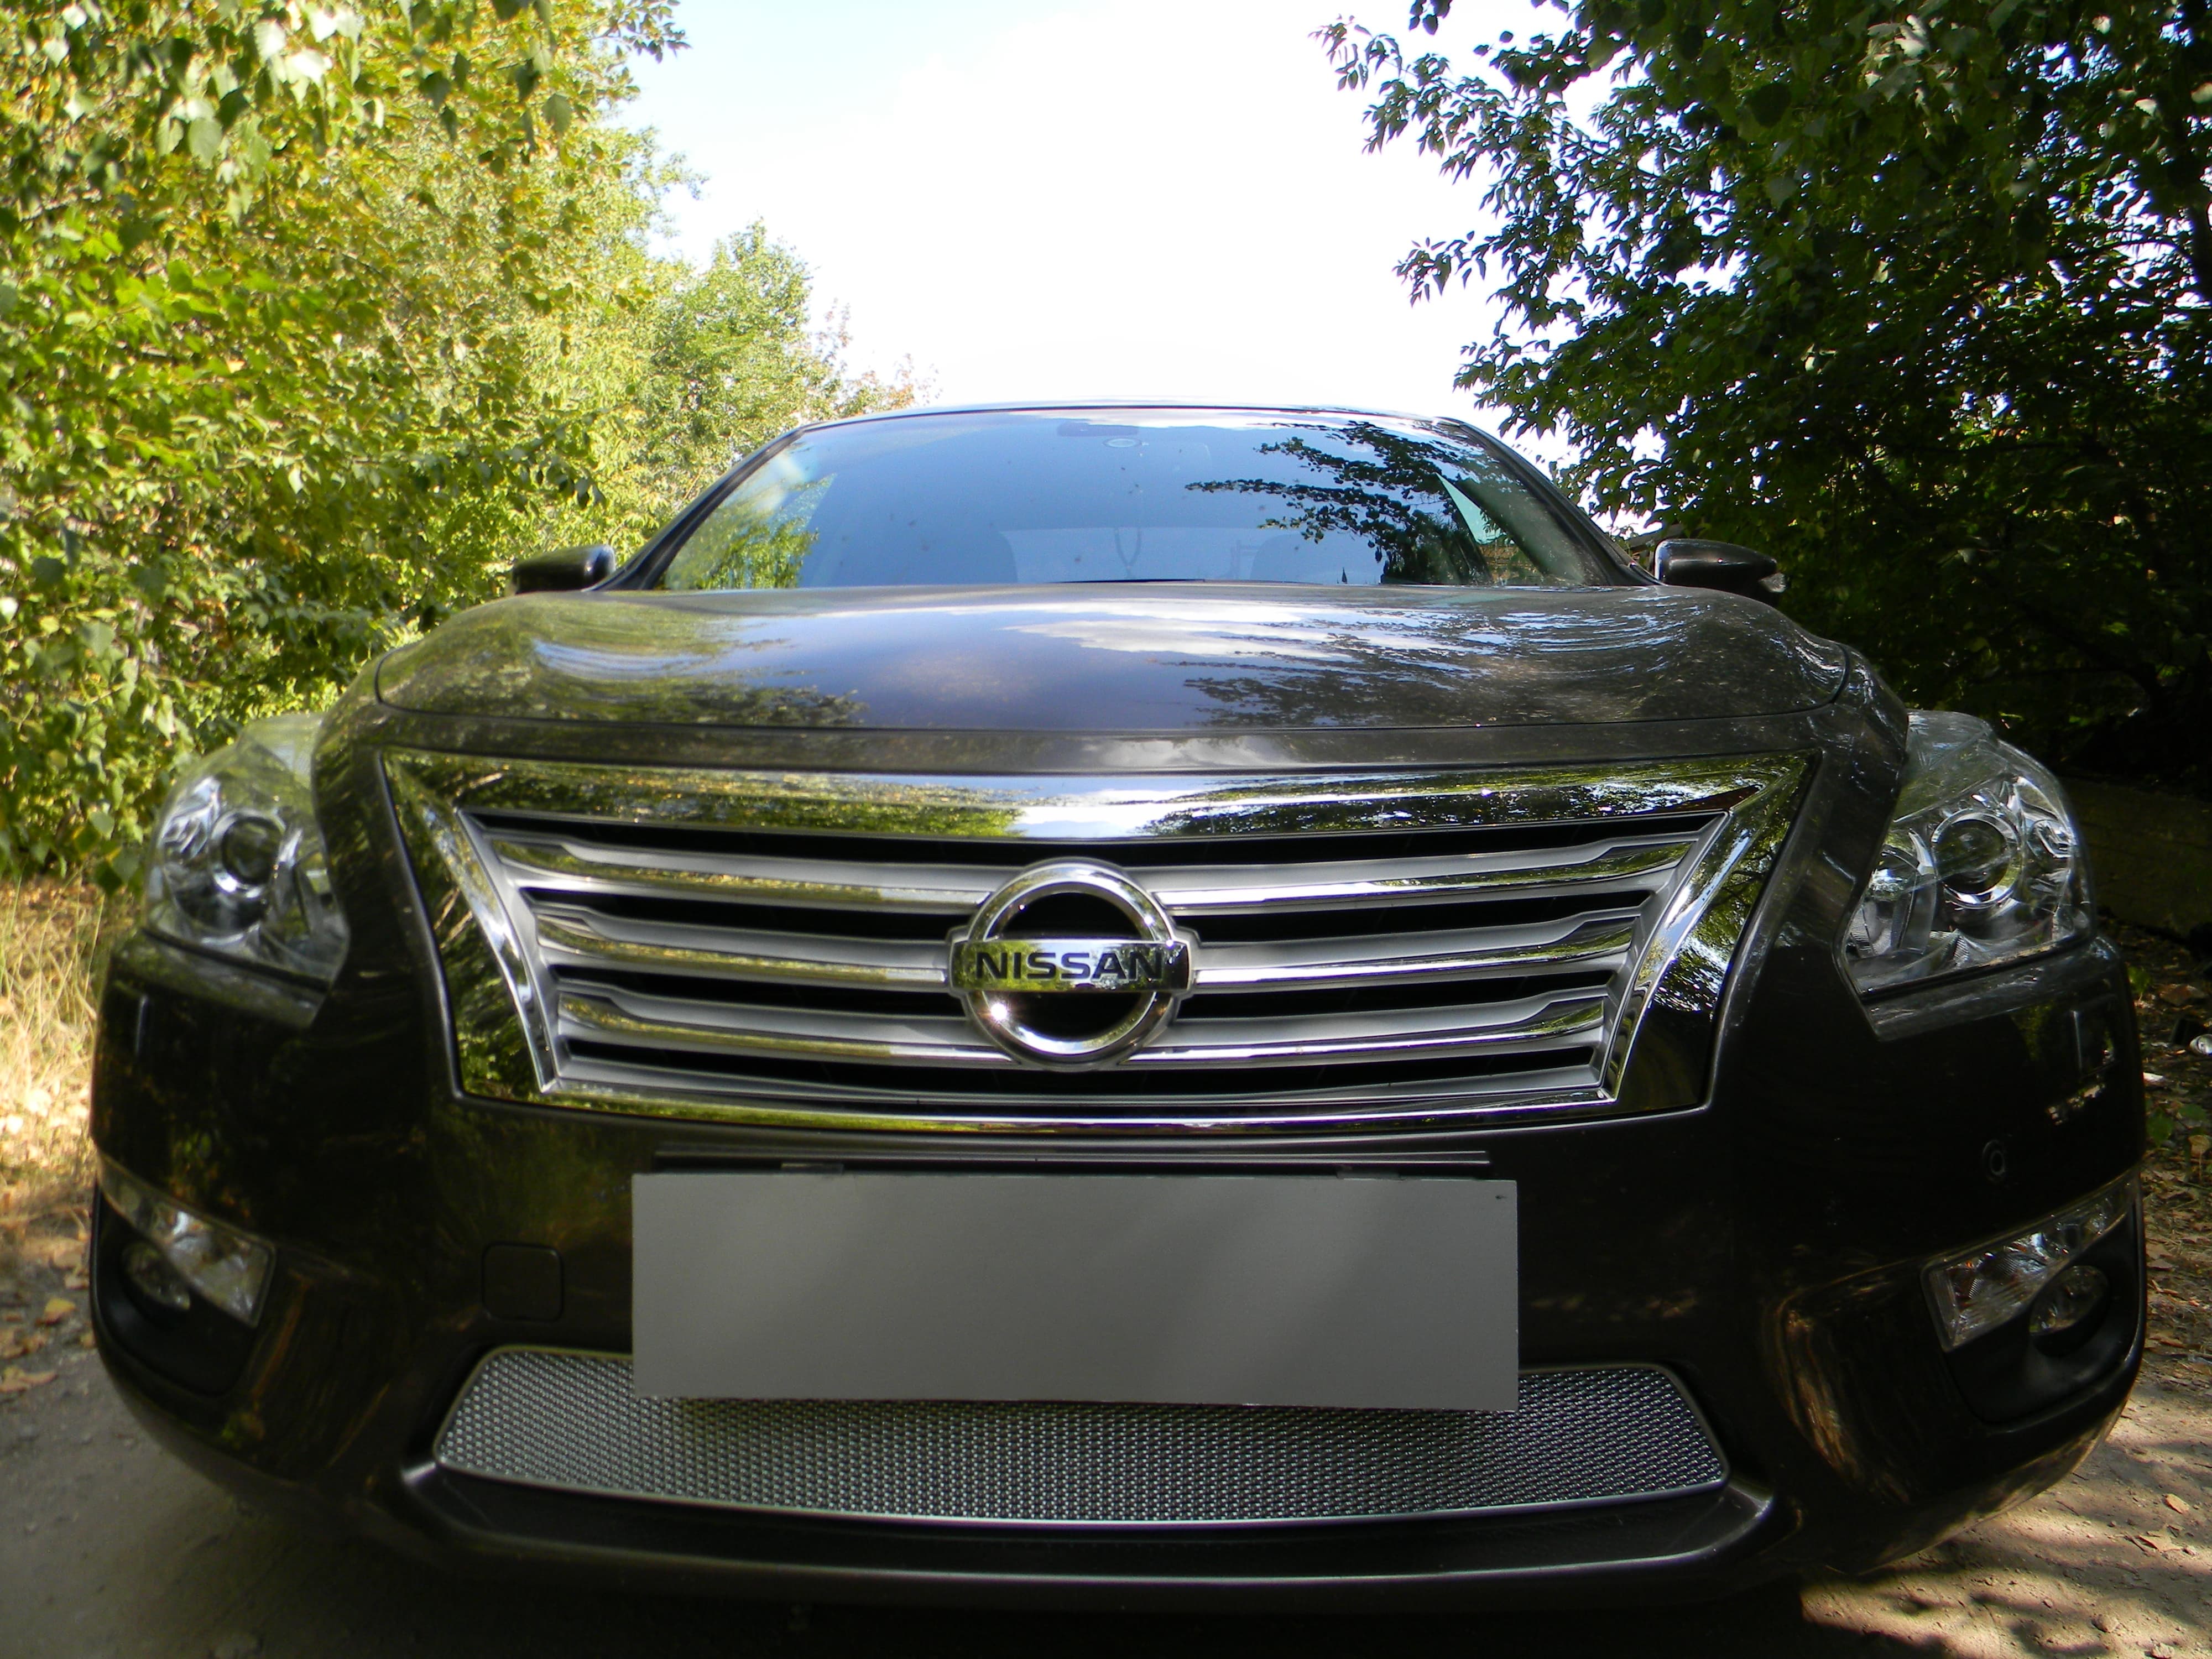 Защитная сетка радиатора ProtectGrille Premium для Nissan Teana (2014-2015 Хром)